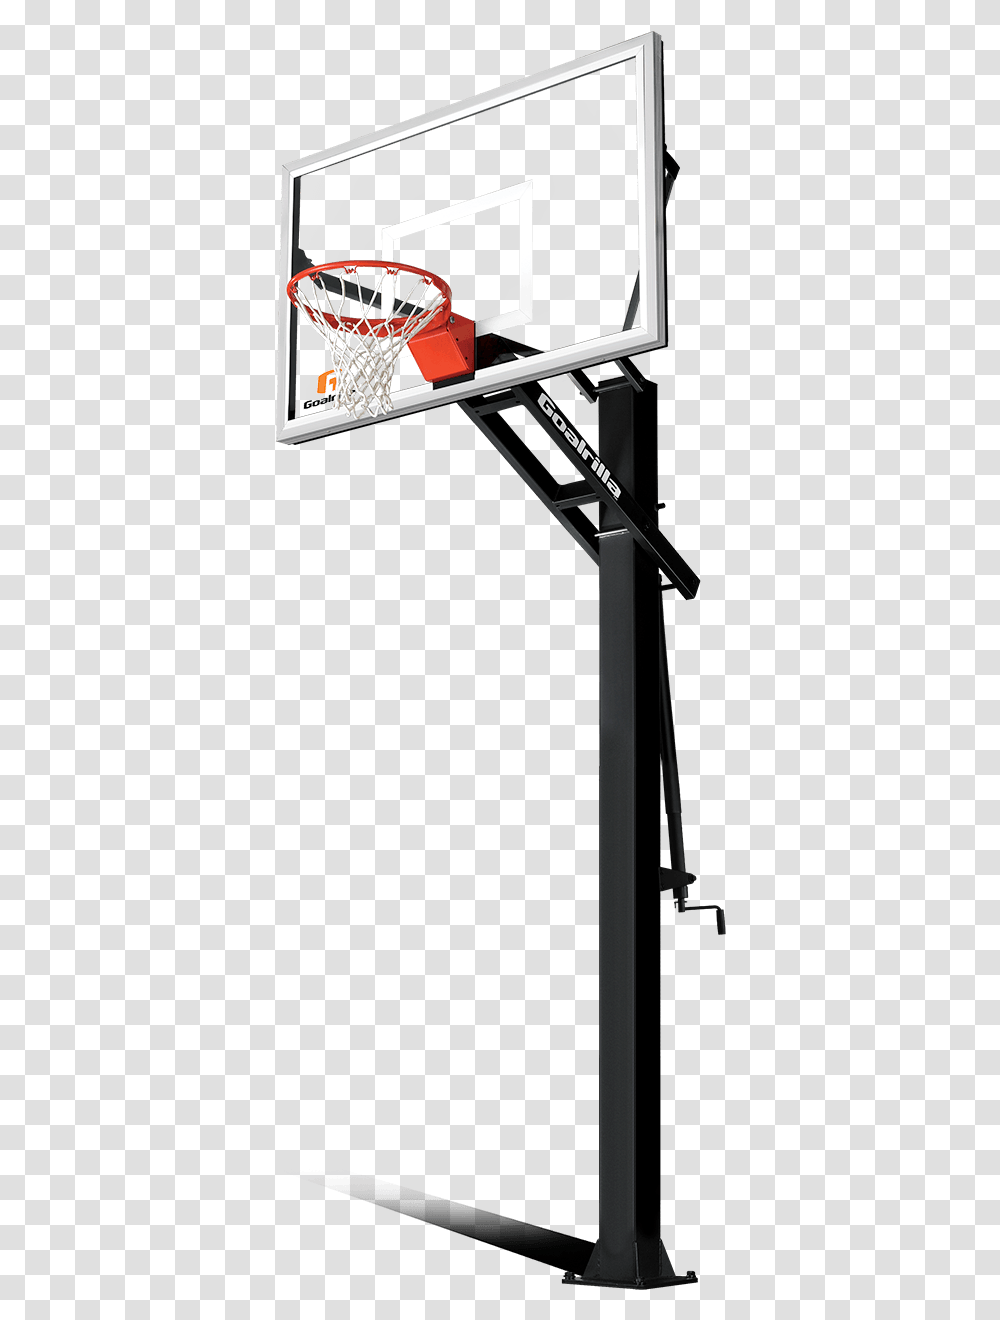 Goalrilla Inground Basketball Hoop, Stand, Shop, Lamp Post, Utility Pole Transparent Png